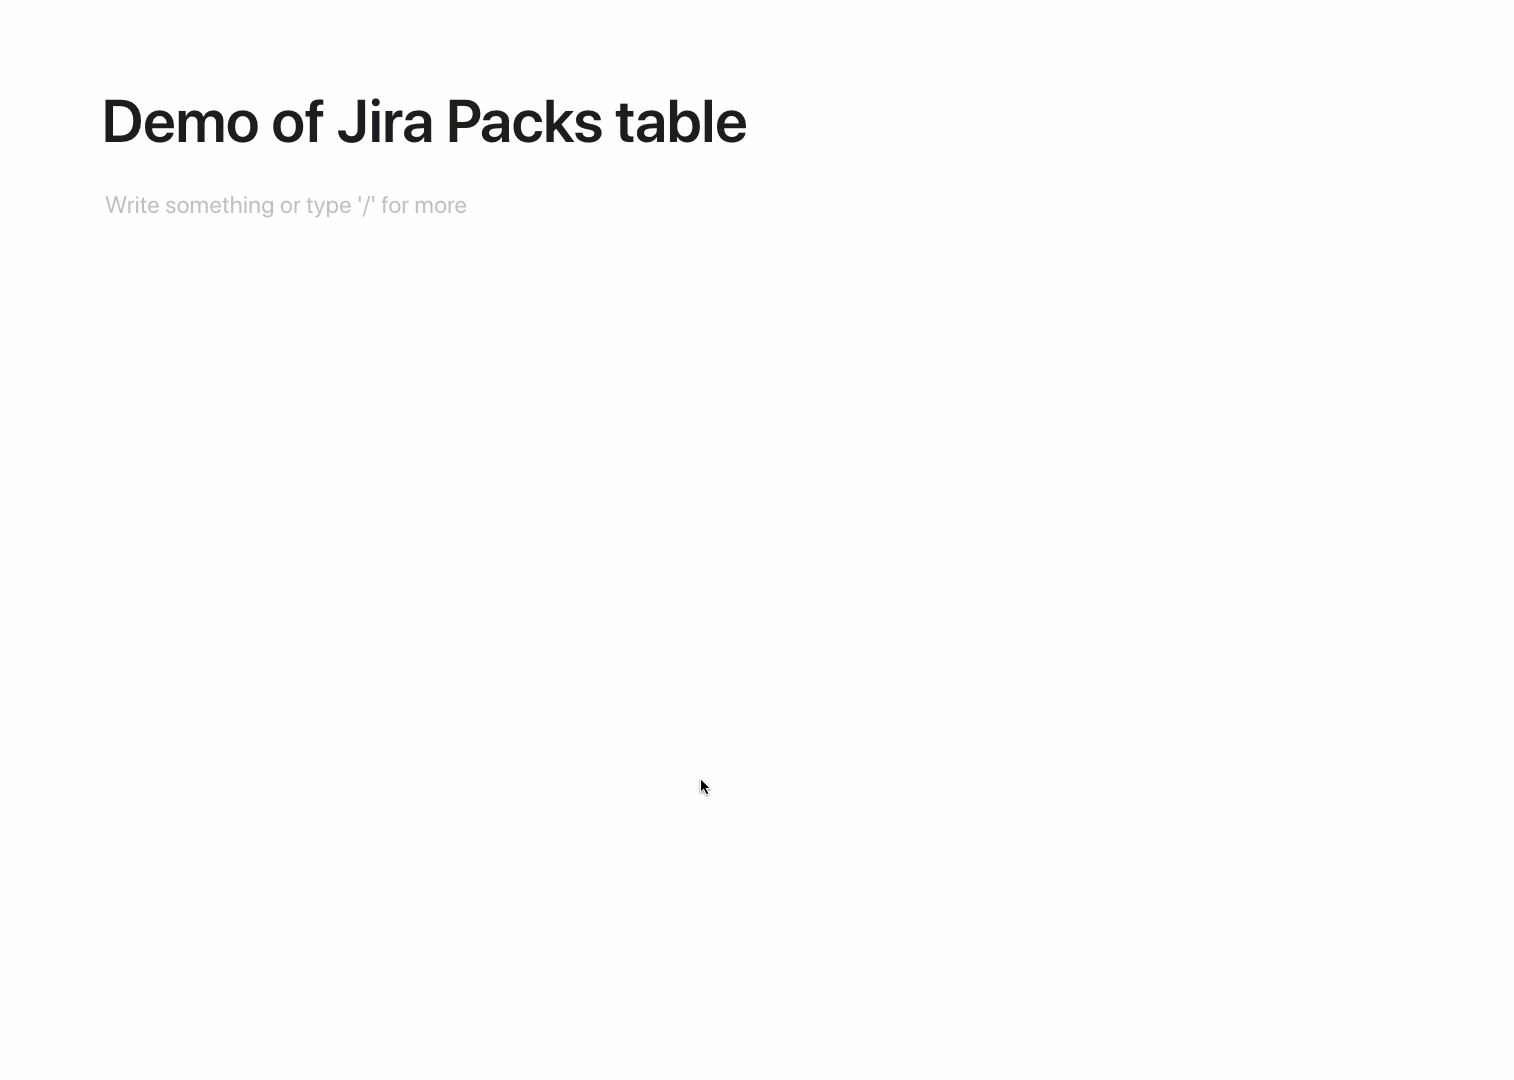 creating a jira packs table